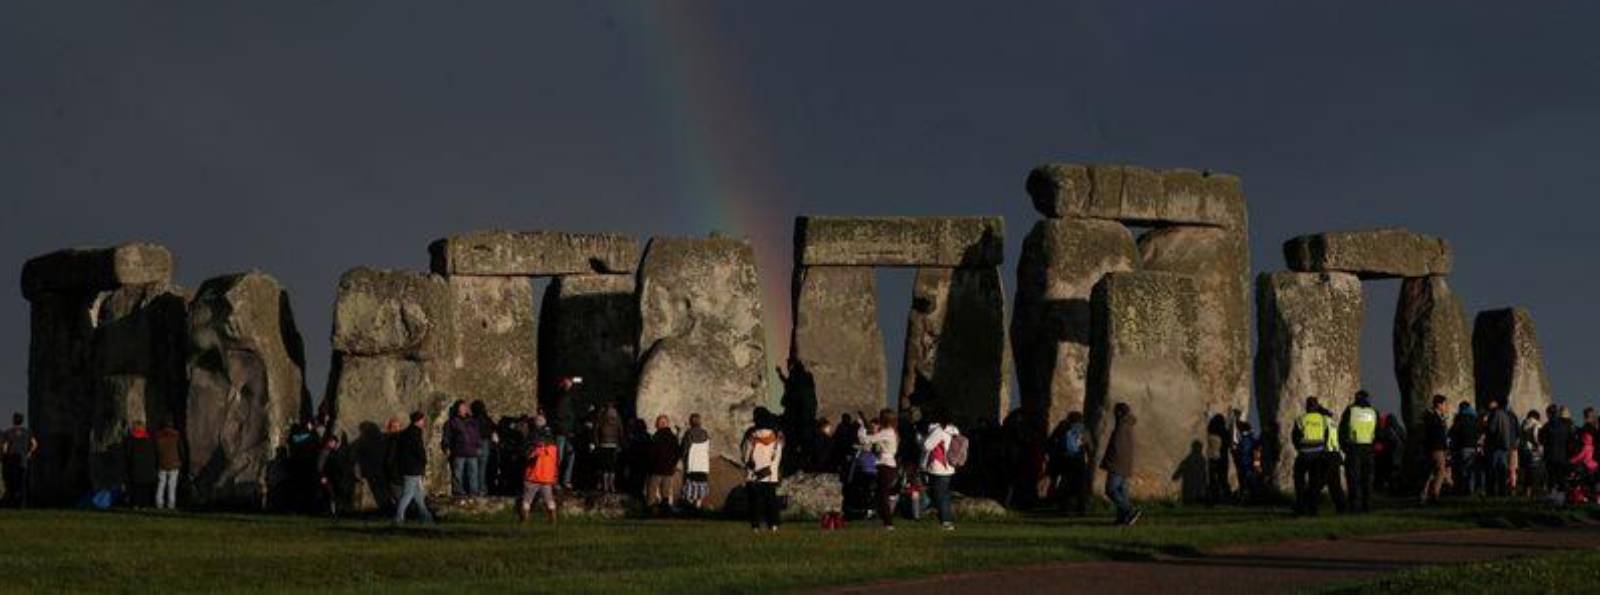 Mystery of Stonehenge megaliths origin solved